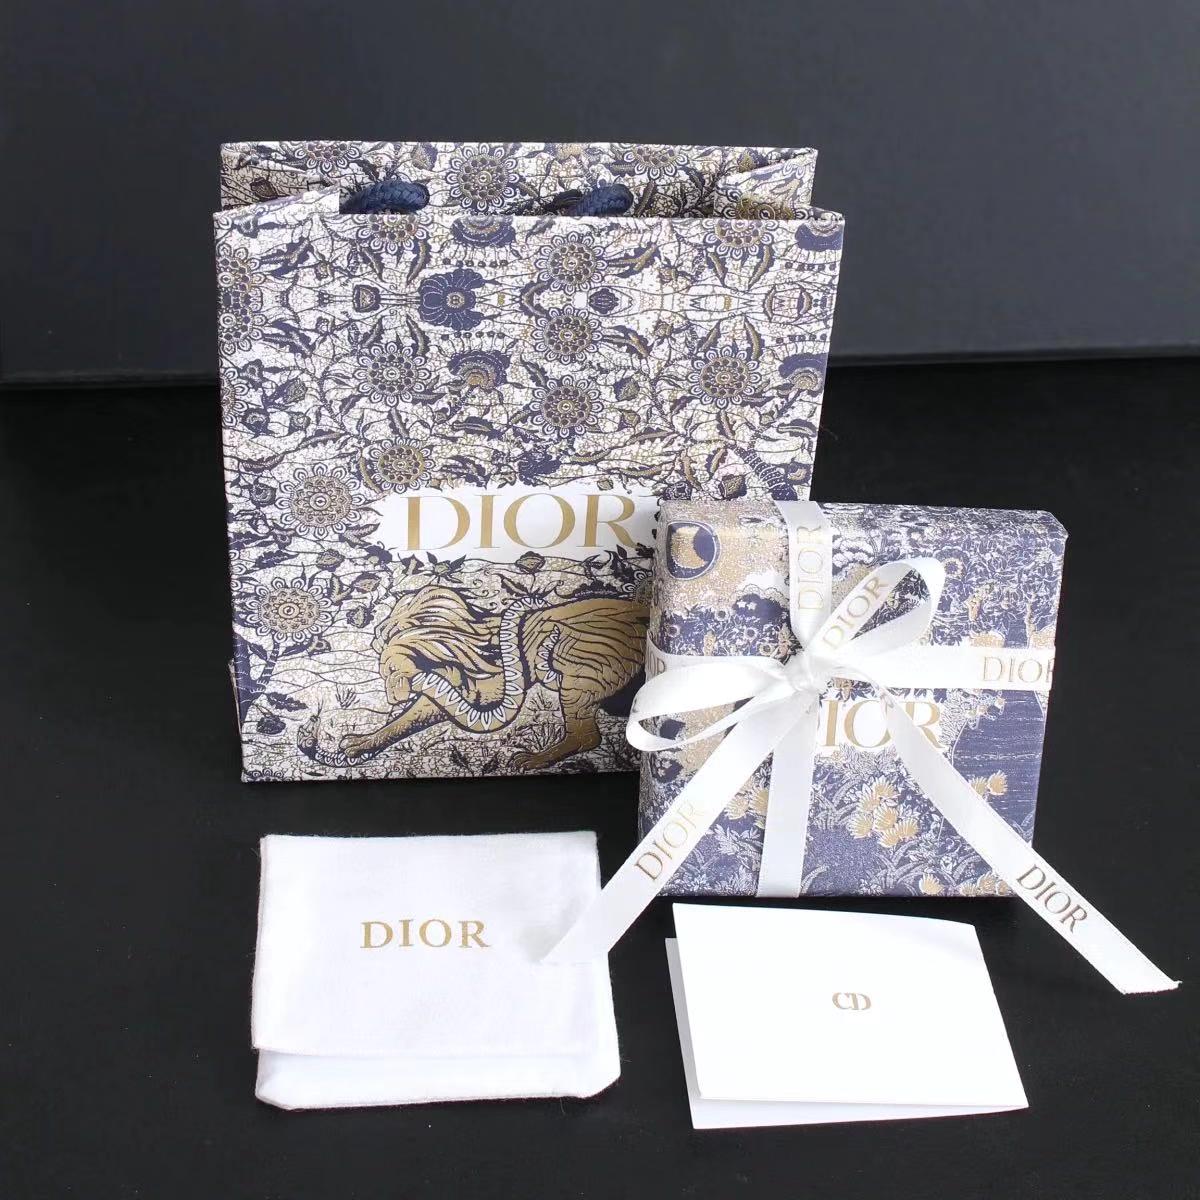 Dior jewelry box set